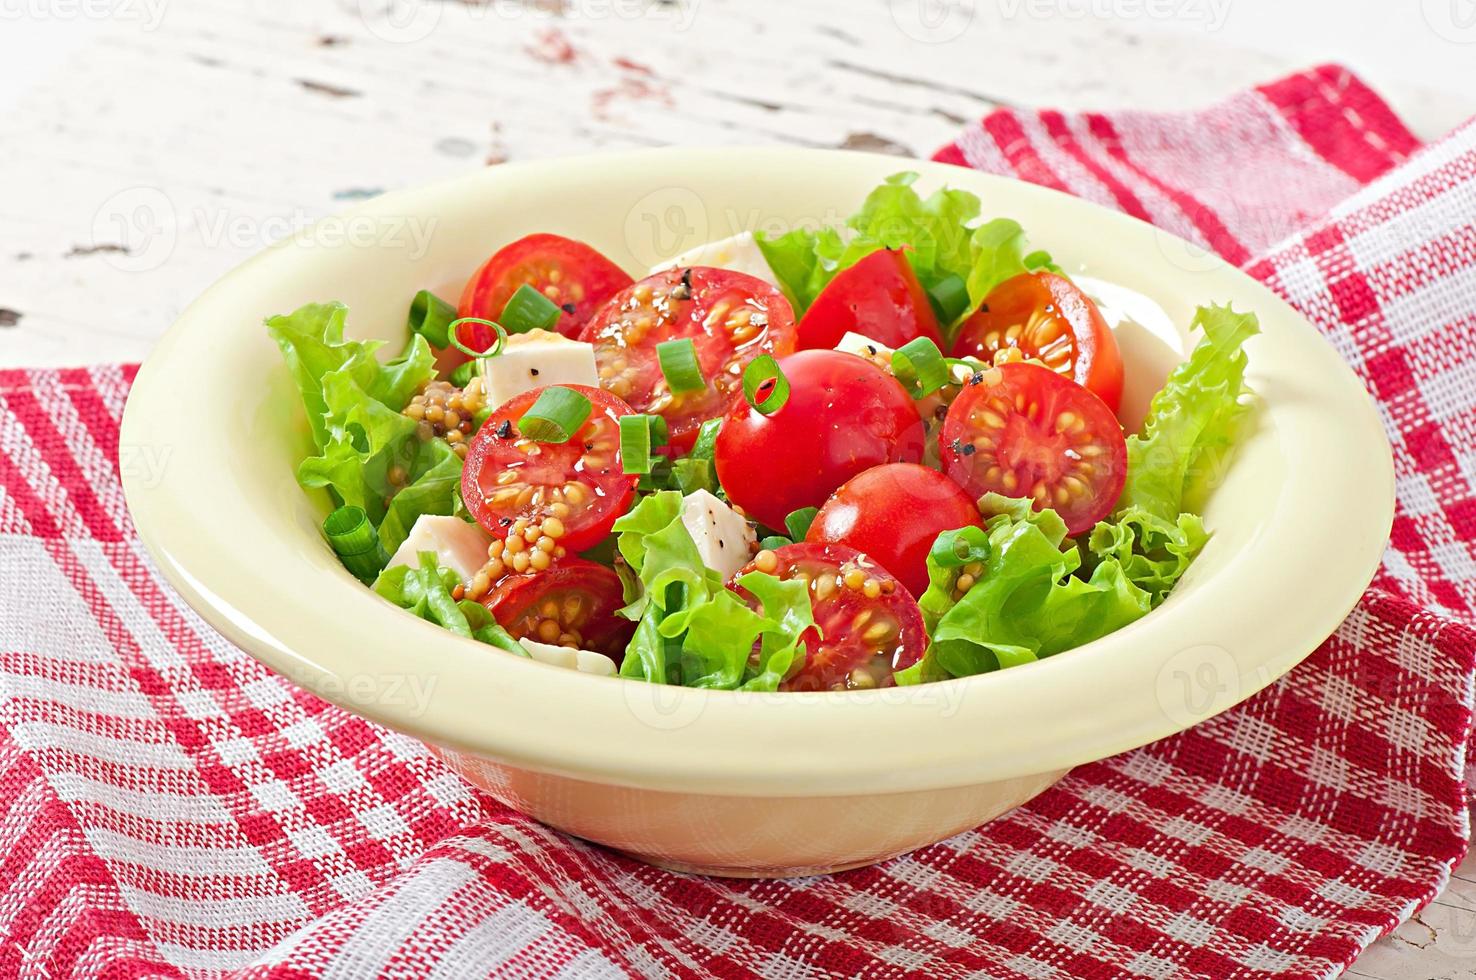 Tomatensalat mit Salat, Käse und Senf-Knoblauch-Dressing foto